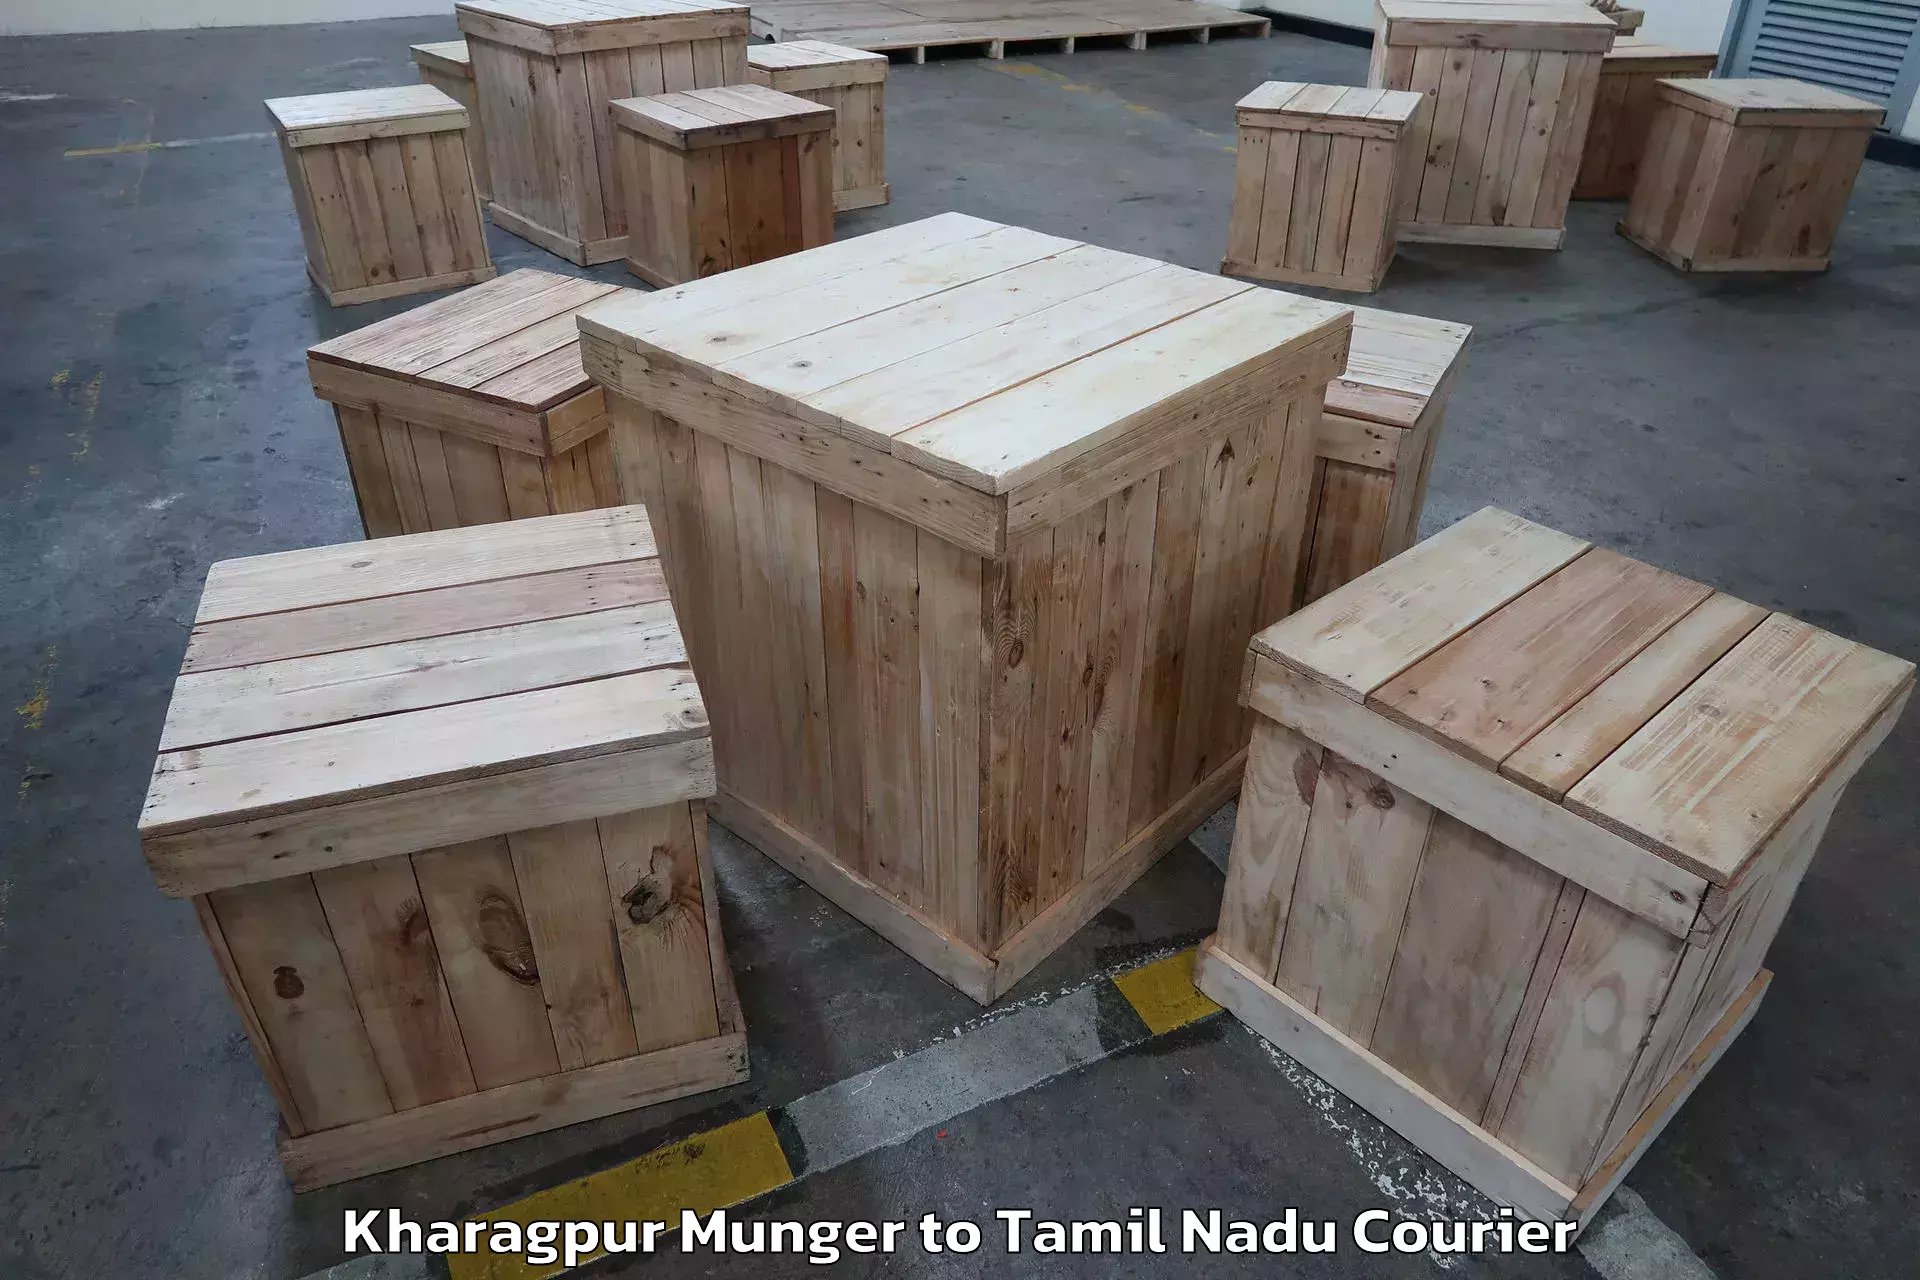 Trusted moving company Kharagpur Munger to Tiruchirappalli